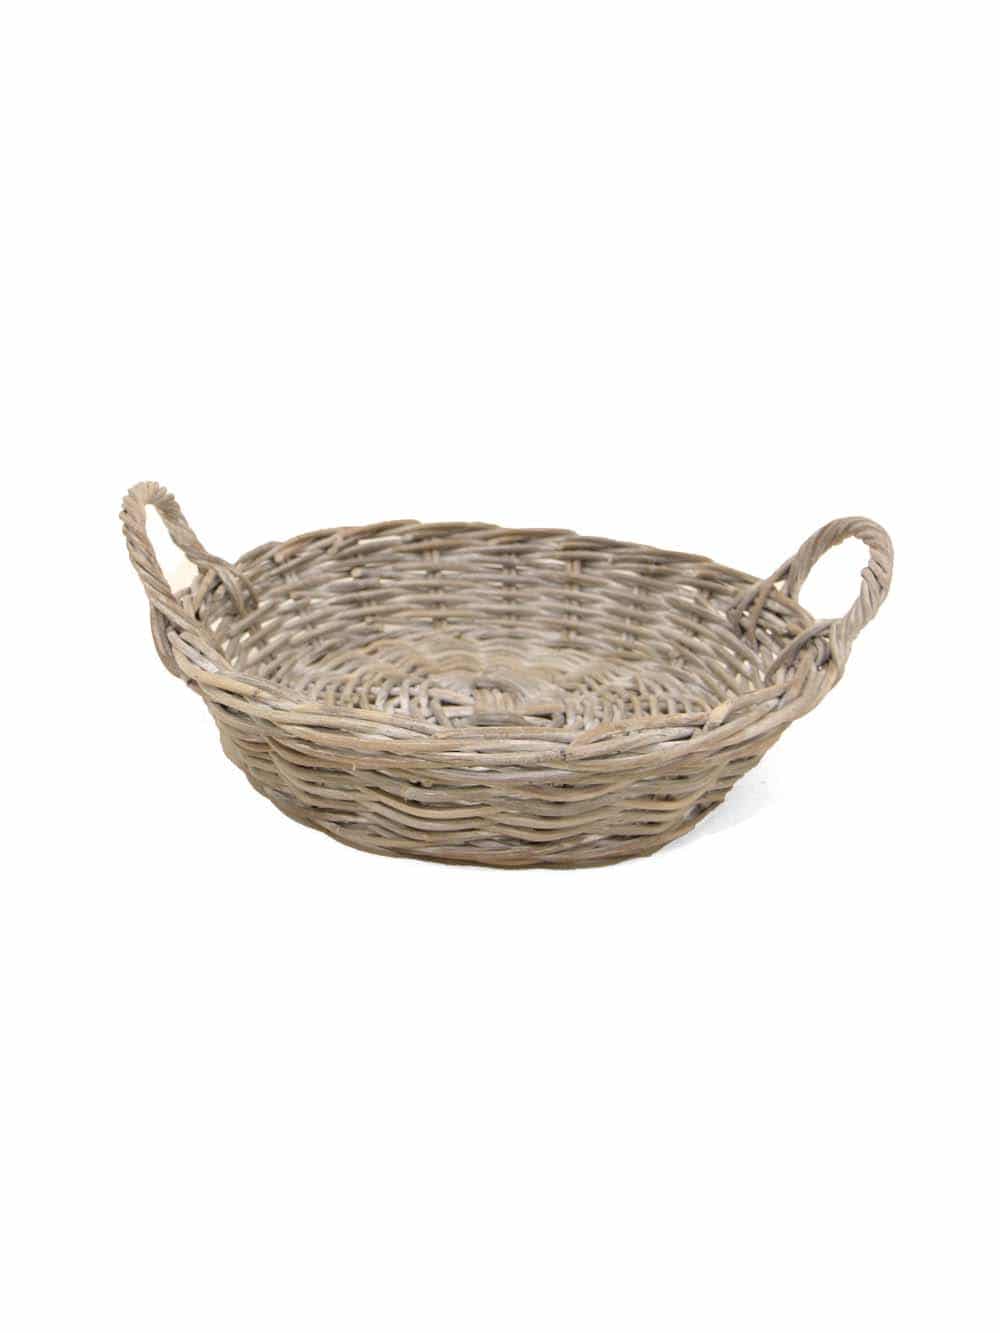 Shallow Oval Wicker Basket - Medium